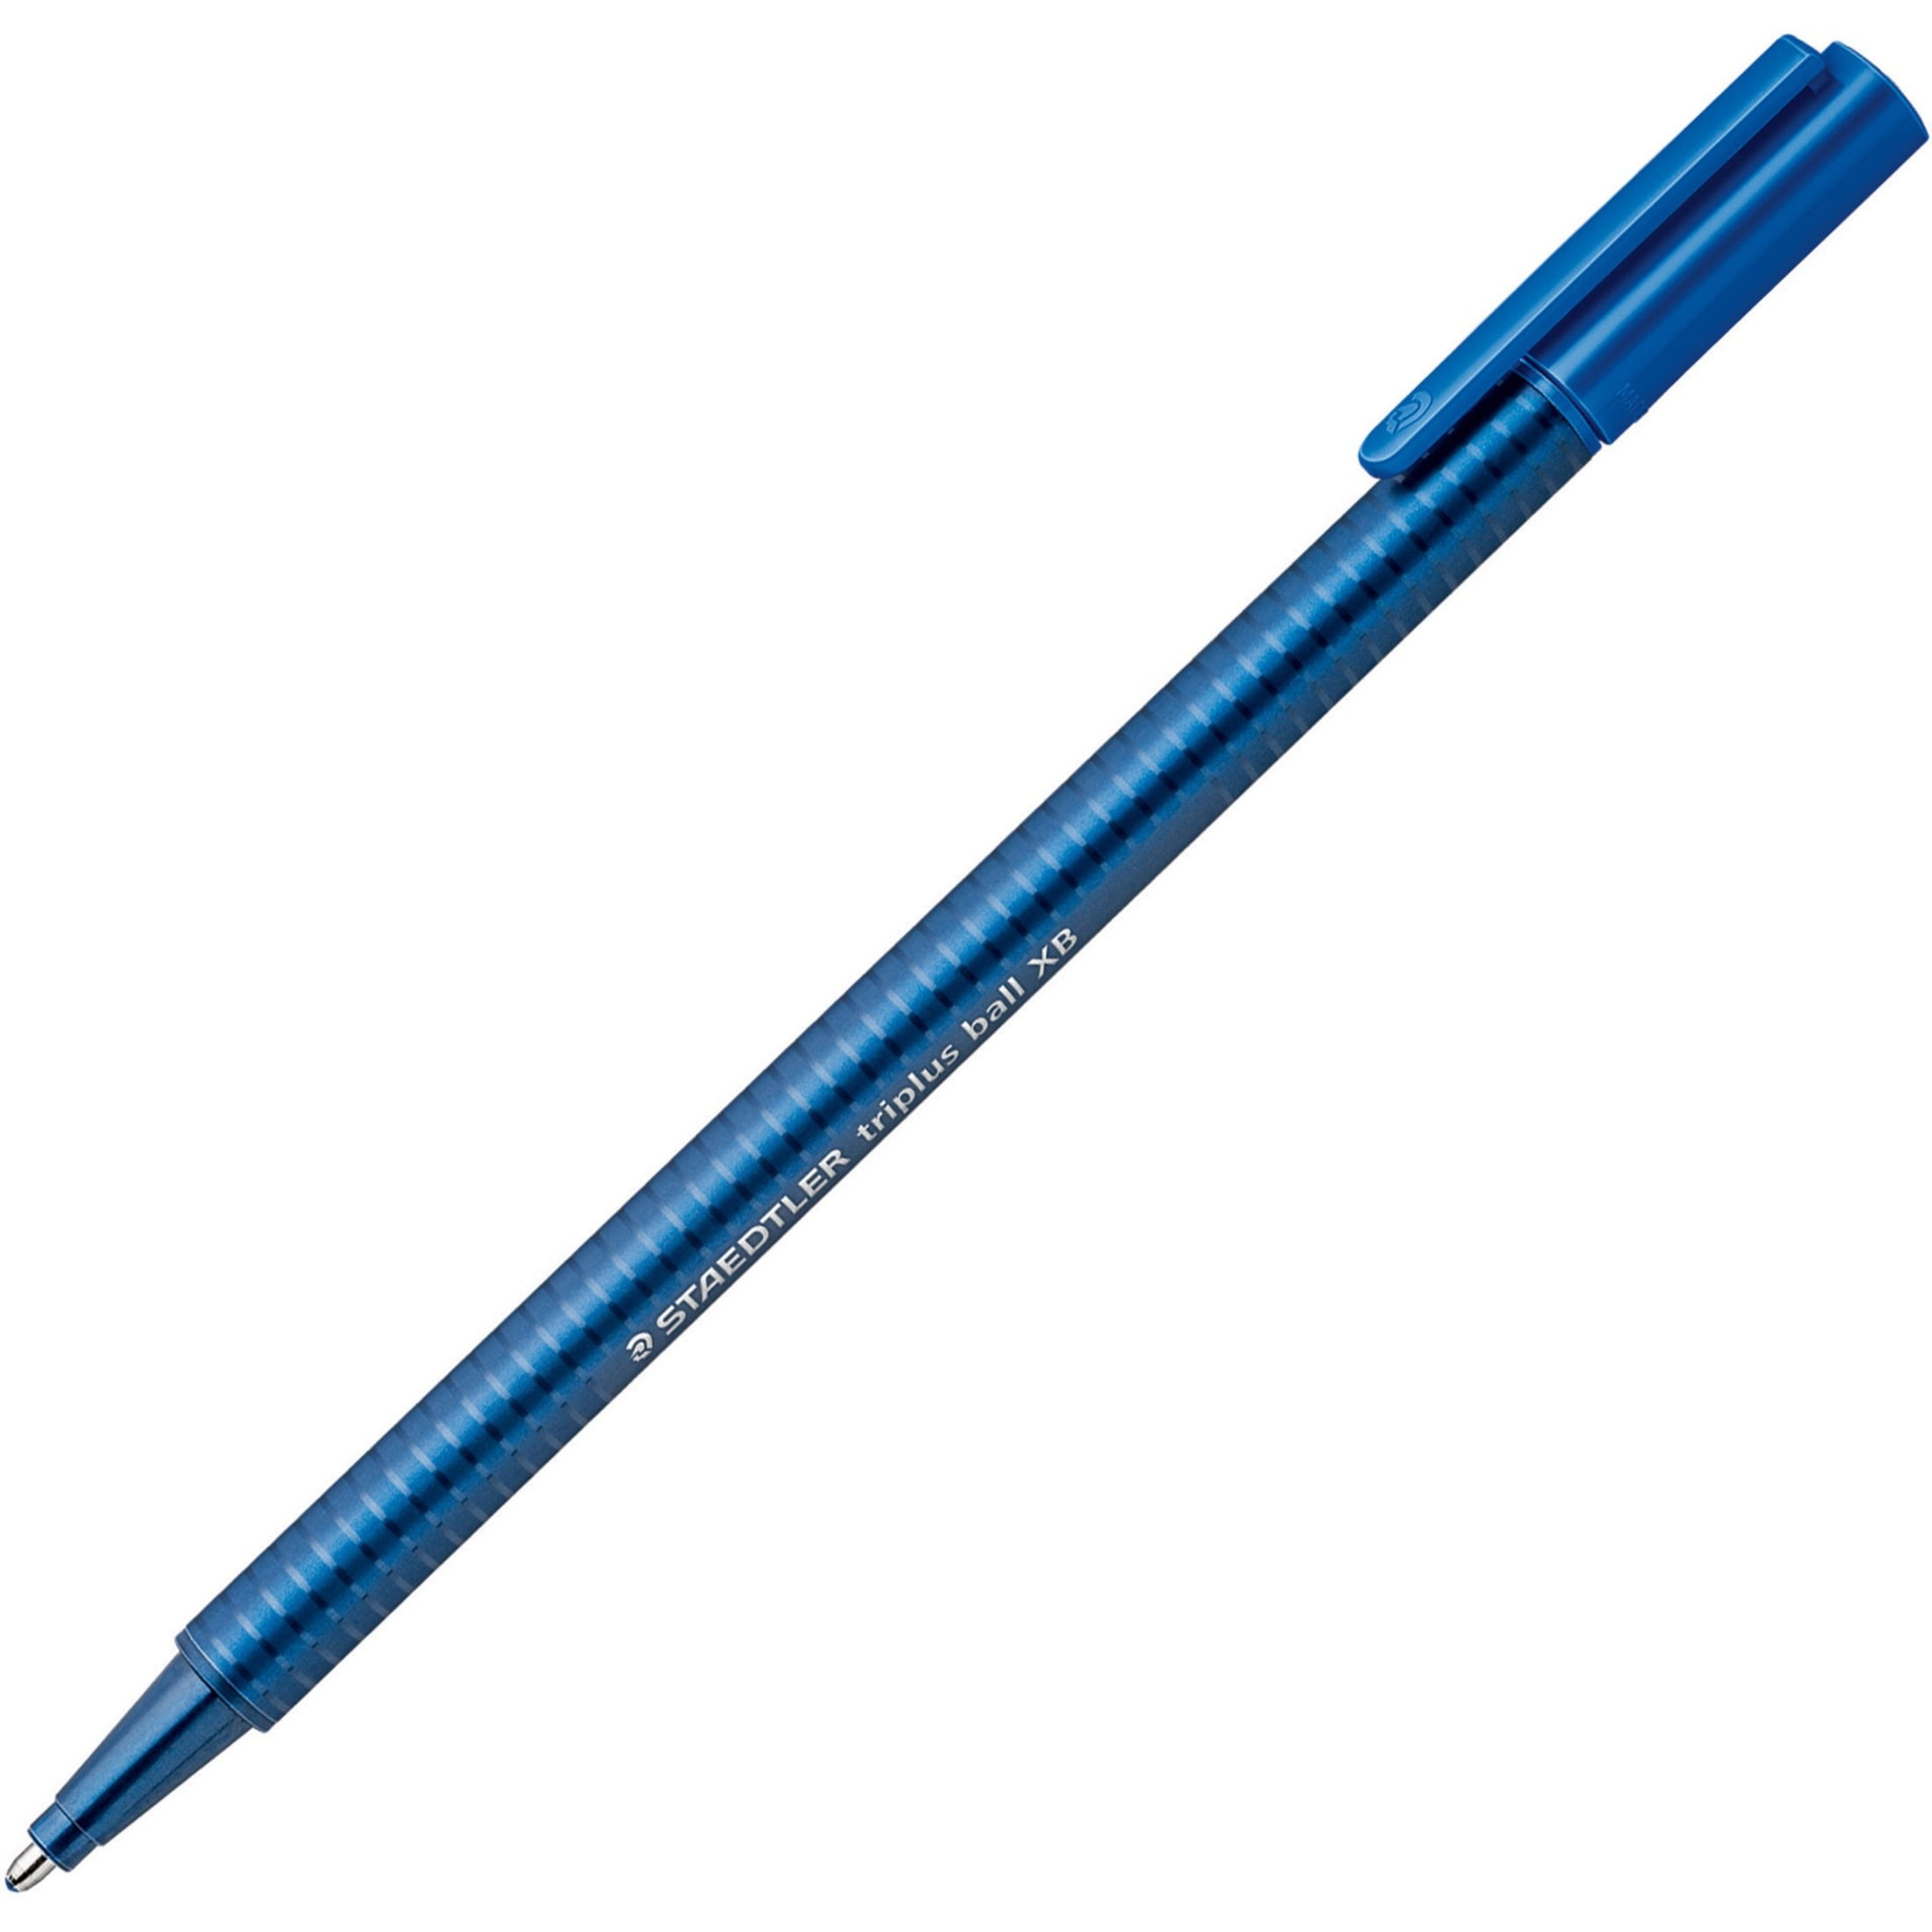 STAEDTLER Triplus Fineliner Porous Point Pen 0.3 mm Assorted Ink